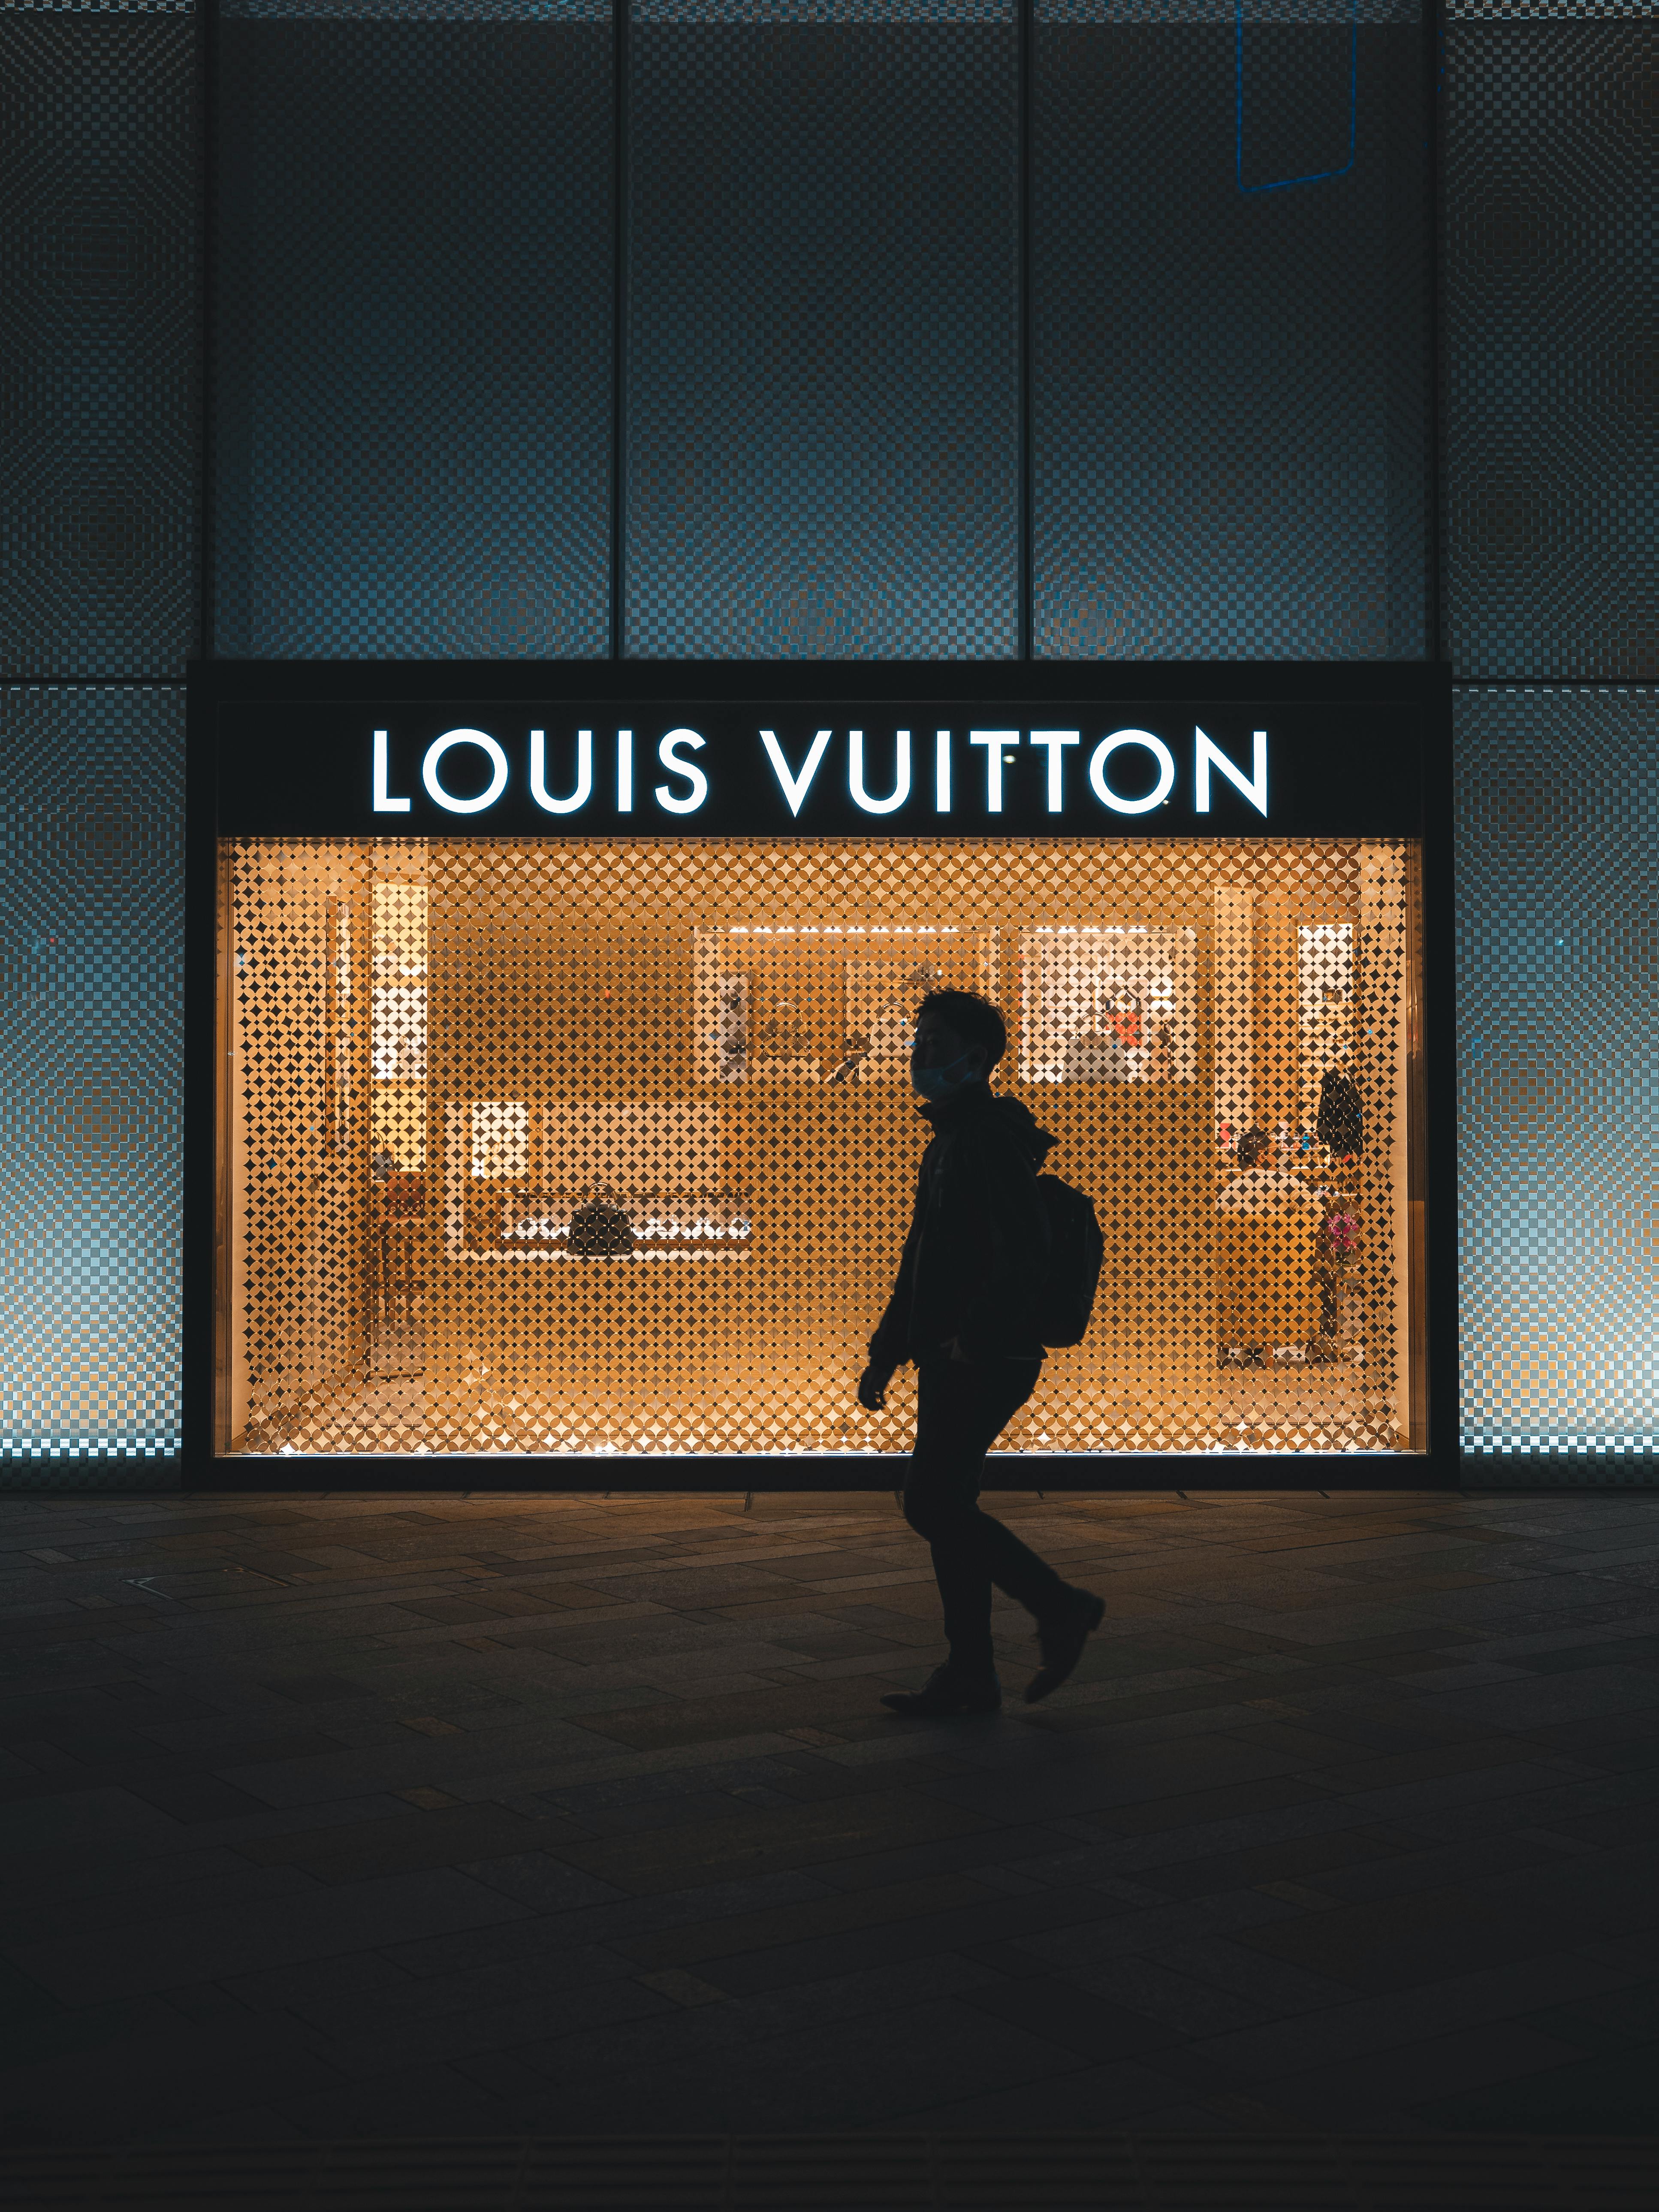 Download Golden Brown Louis Vuitton iPhone Wallpaper